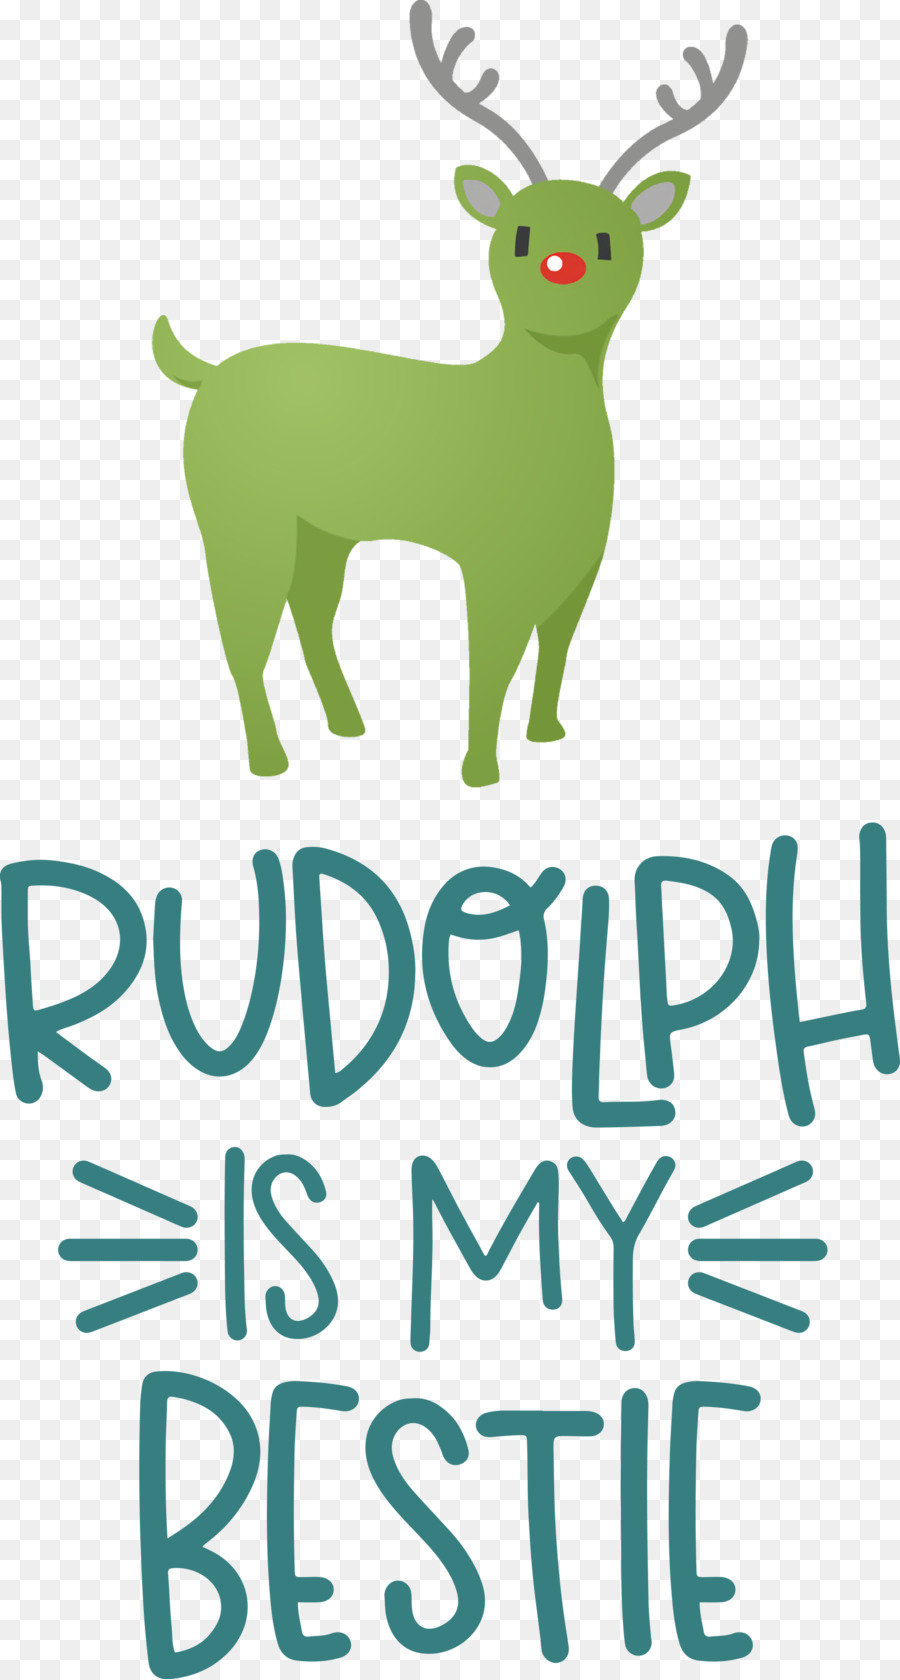 Rudolph is my bestie Rudolph Deer